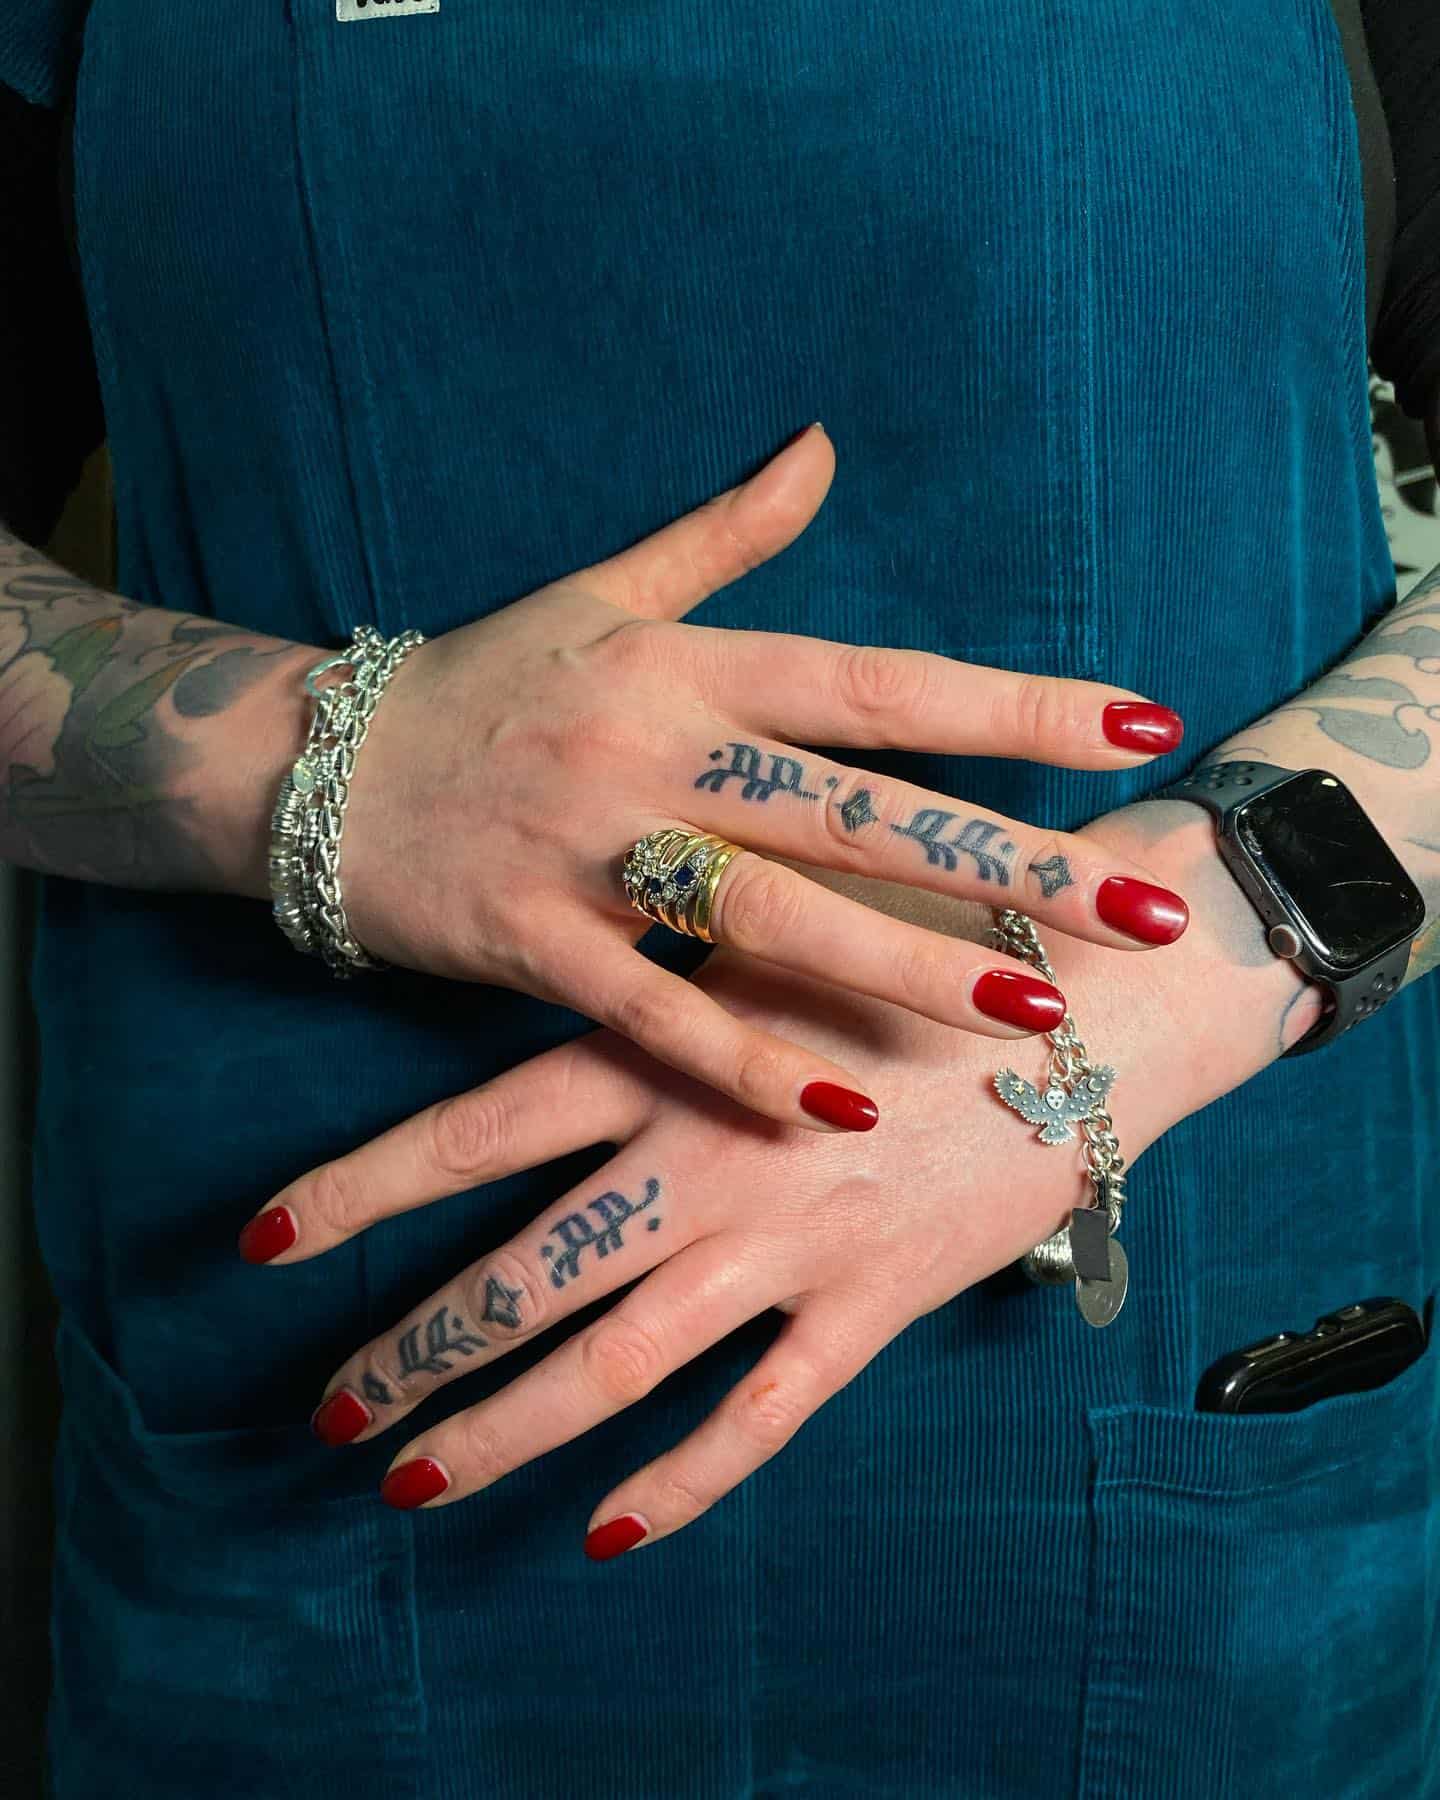 Hand Tattoo Man Photos and Images | Shutterstock-as247.edu.vn